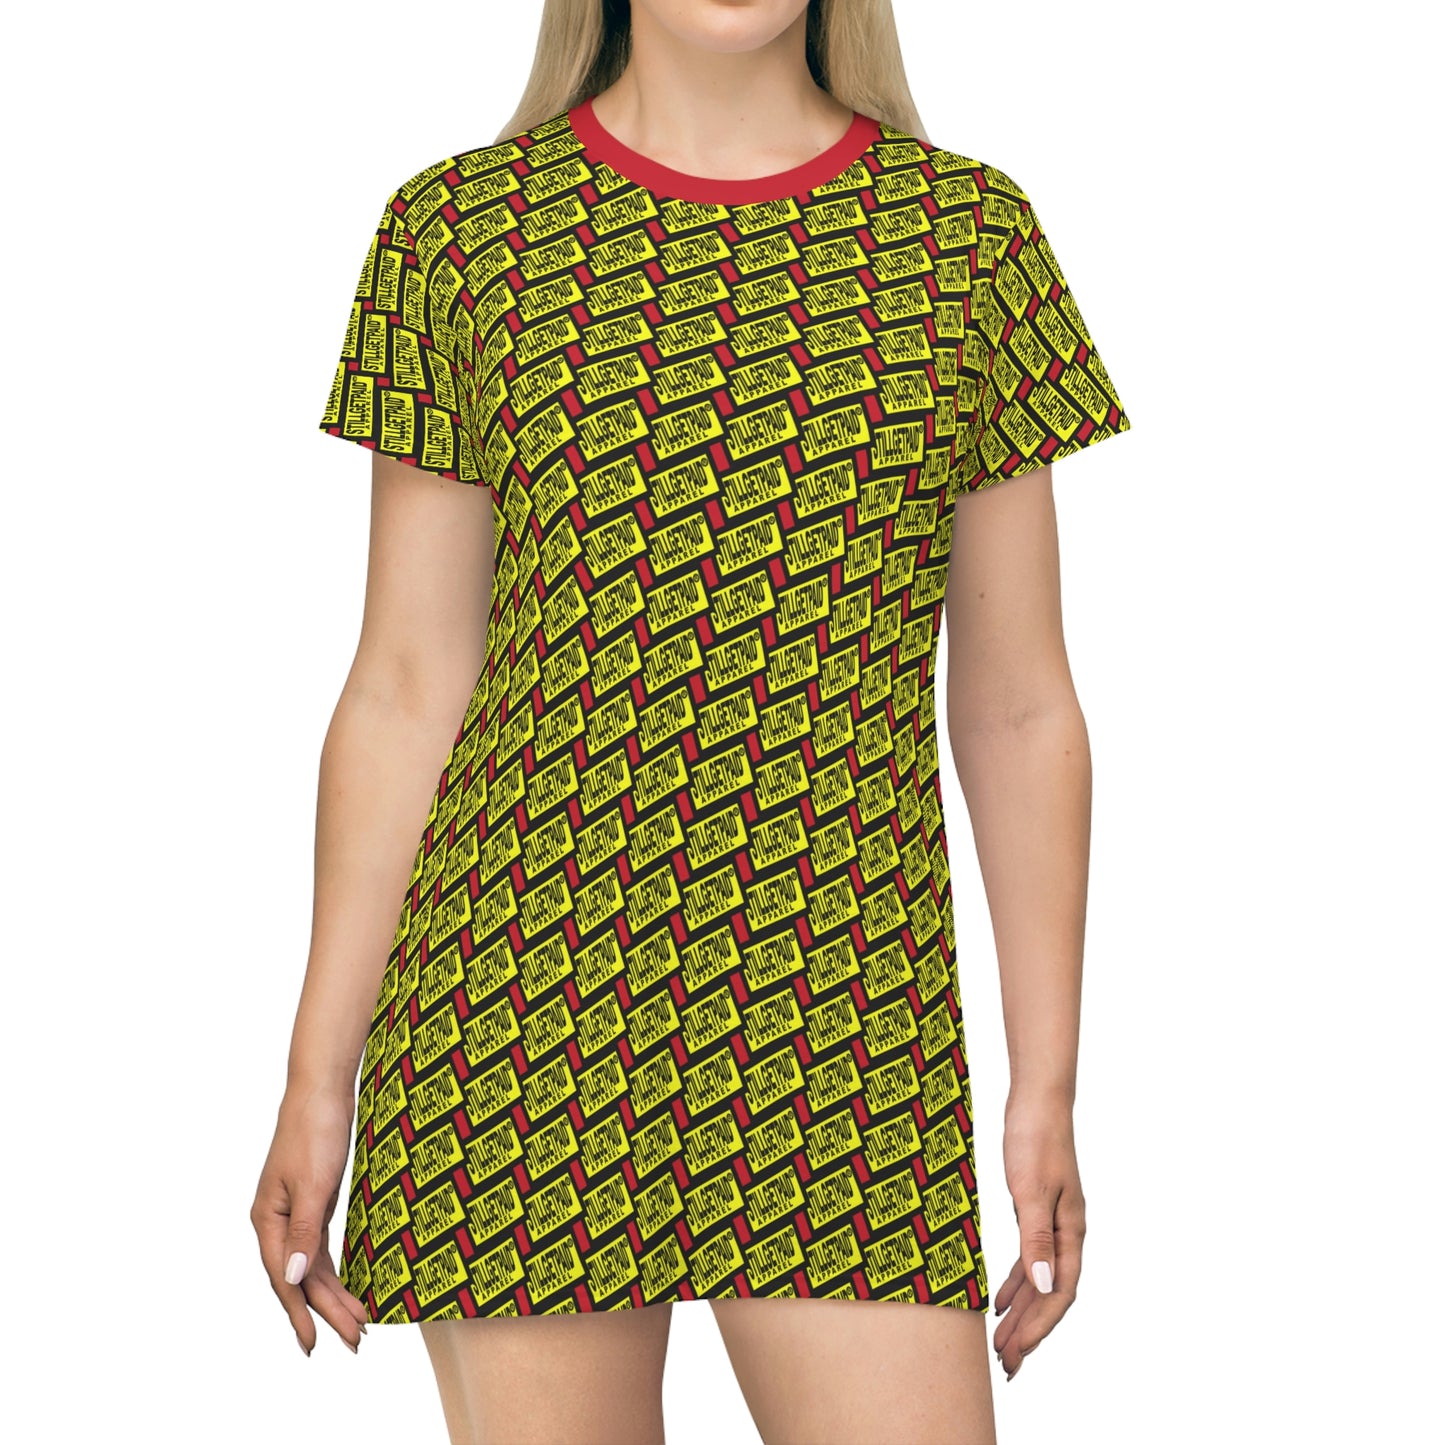 STILLGETPAID® APPAREL All Over Print T-Shirt Dress